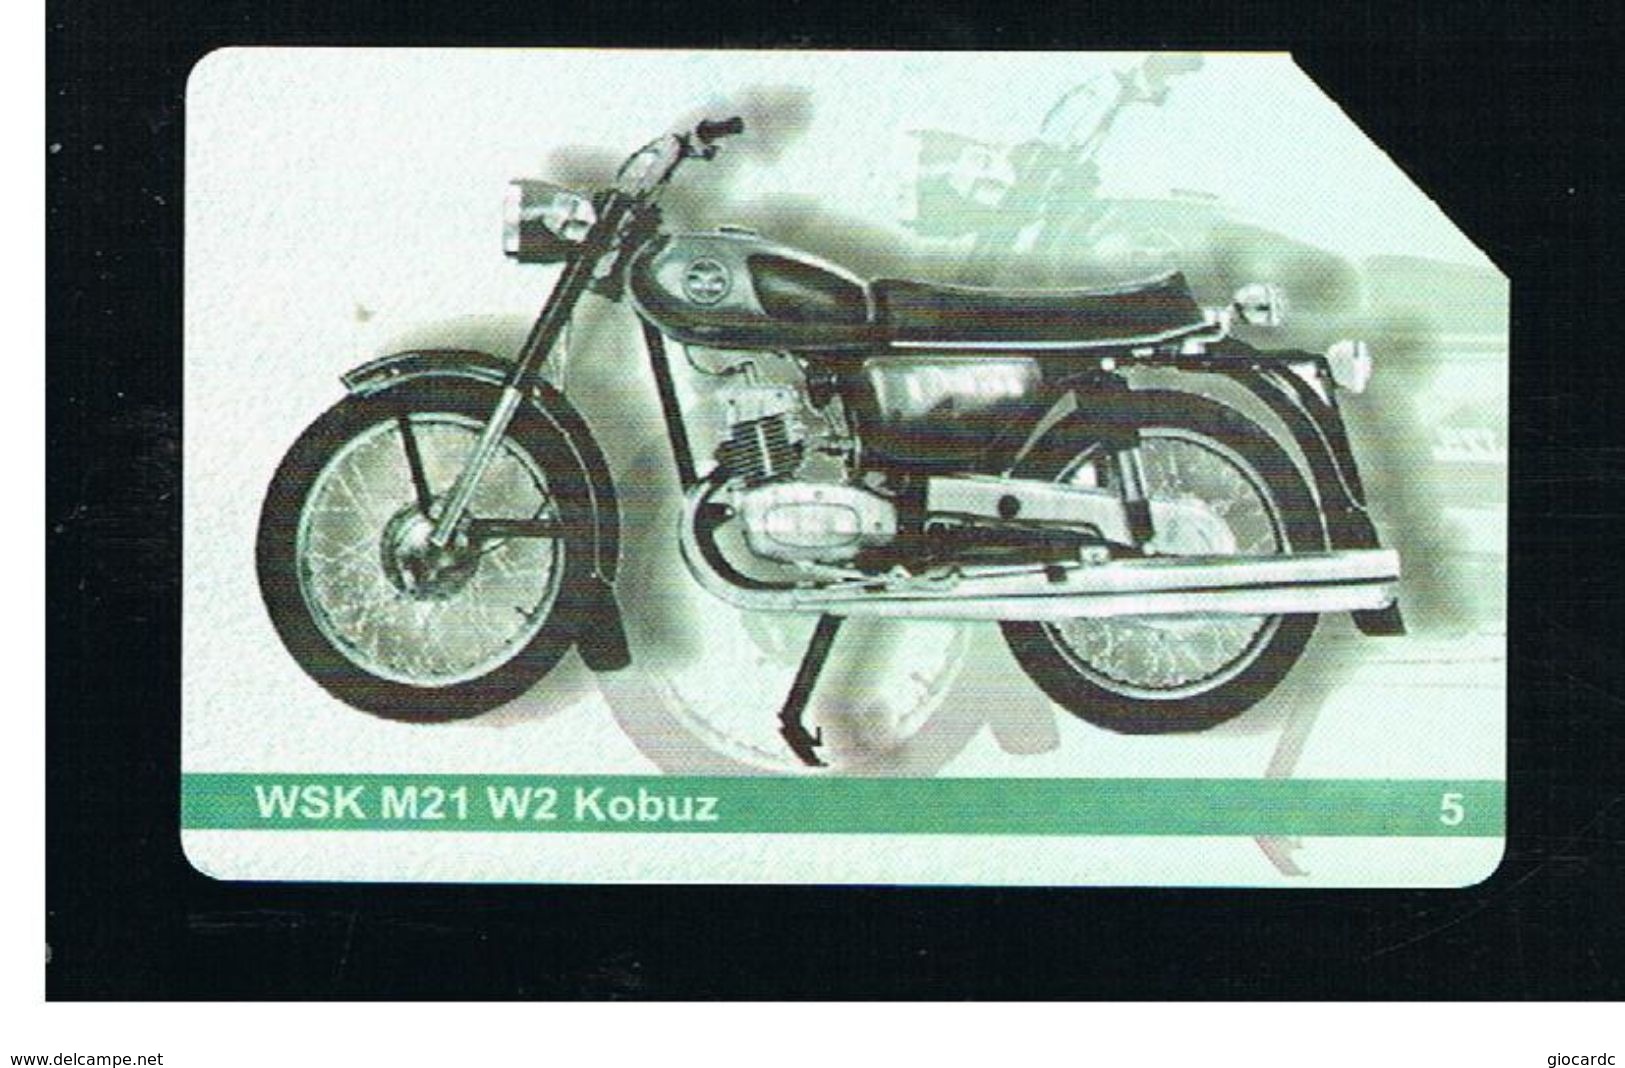 POLONIA (POLAND) - TP  - MOTO: WSK M21 W2 KOBUZ - USED - RIF. 10242 - Motorräder